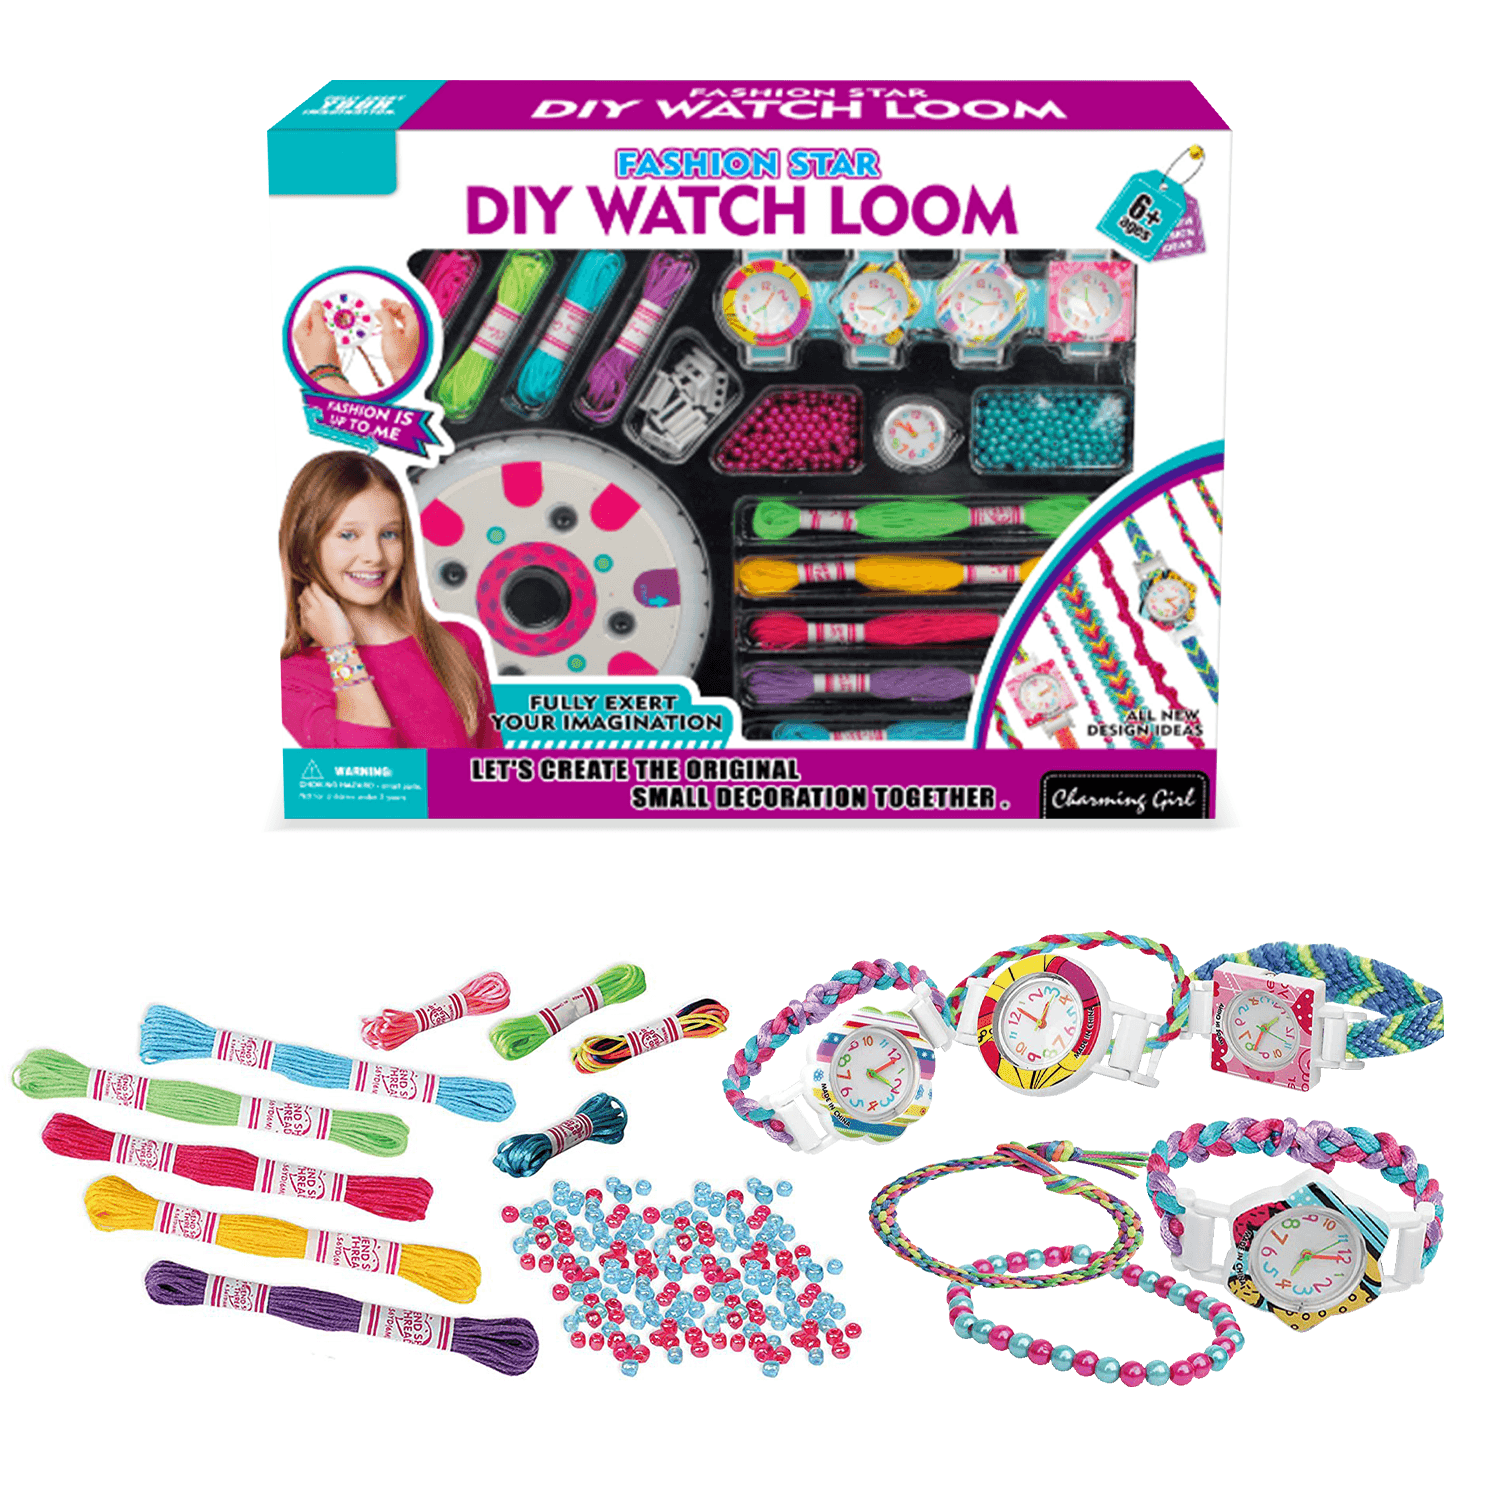 JOJANEAS Bracelet Making Kit - 6800 Pcs Beads Bracelet Kit Arts and Crafts for Kids - Jewelry Making Kit Crafts for Girls Adults - Bra